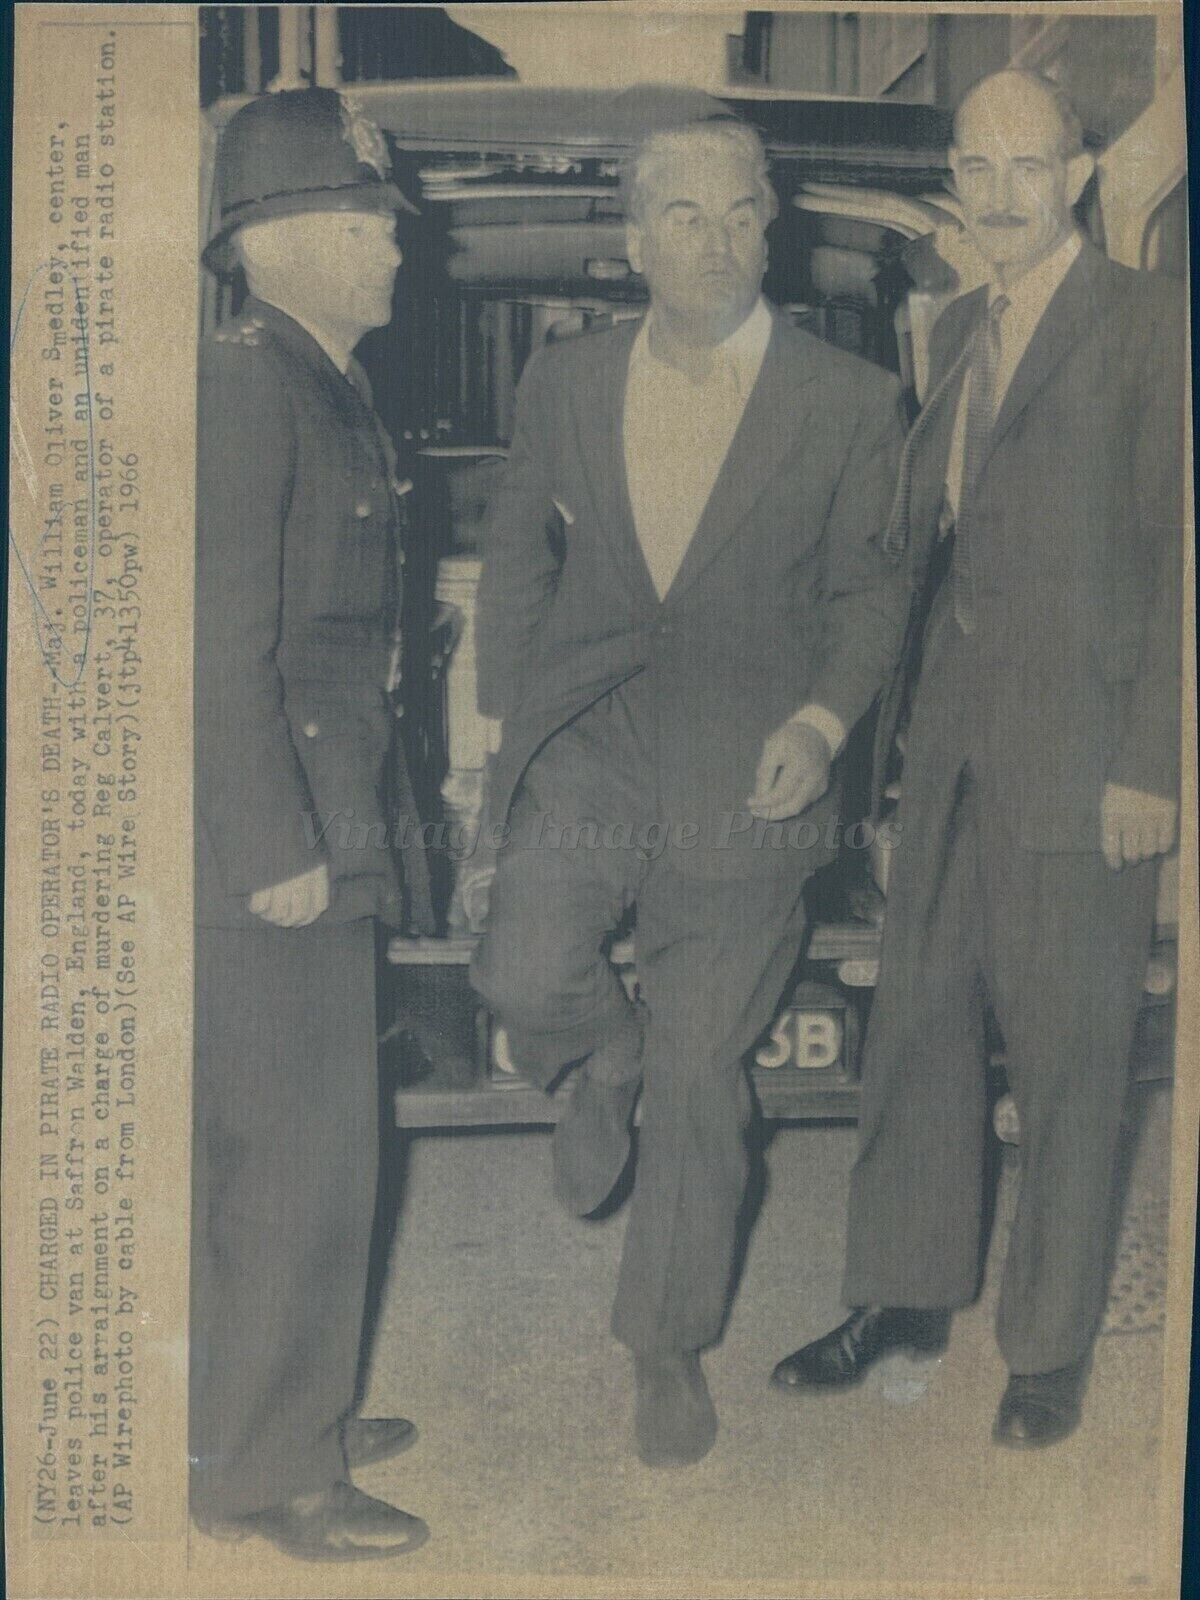 1966 Press Photo Major William Oliver Smedley Police Van Walden Radio Station